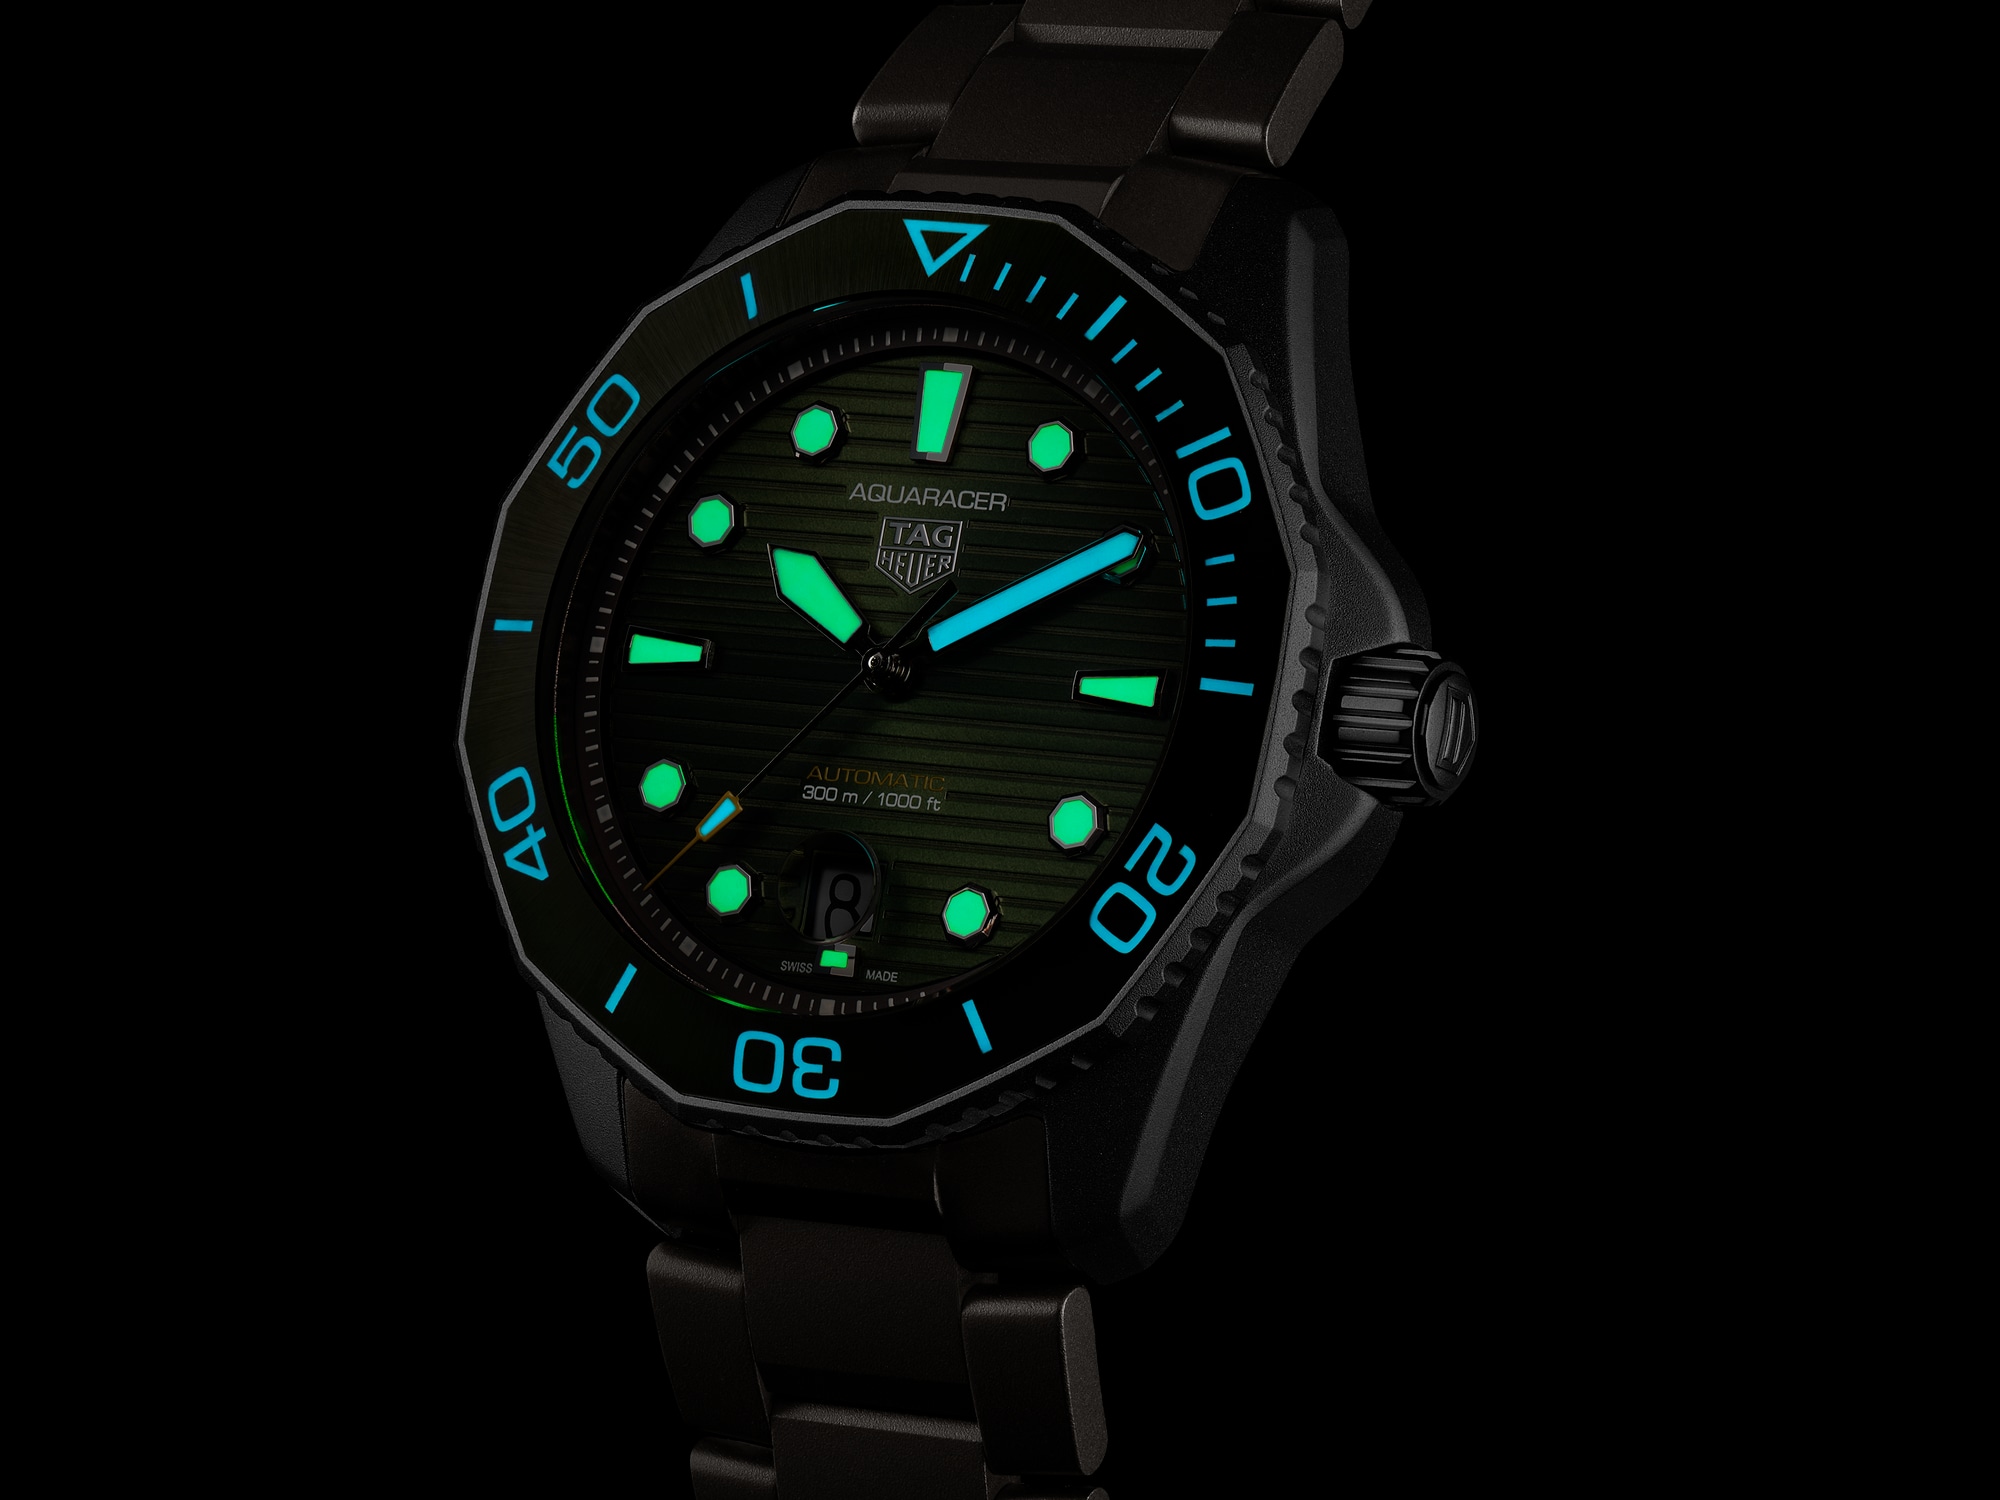 TAG Heuer WAF1110 Aquaracer 300M DiverTAG Heuer WAF111D 39mm Black Diamond Dial & Bezel 300m Stainless Steel Watch